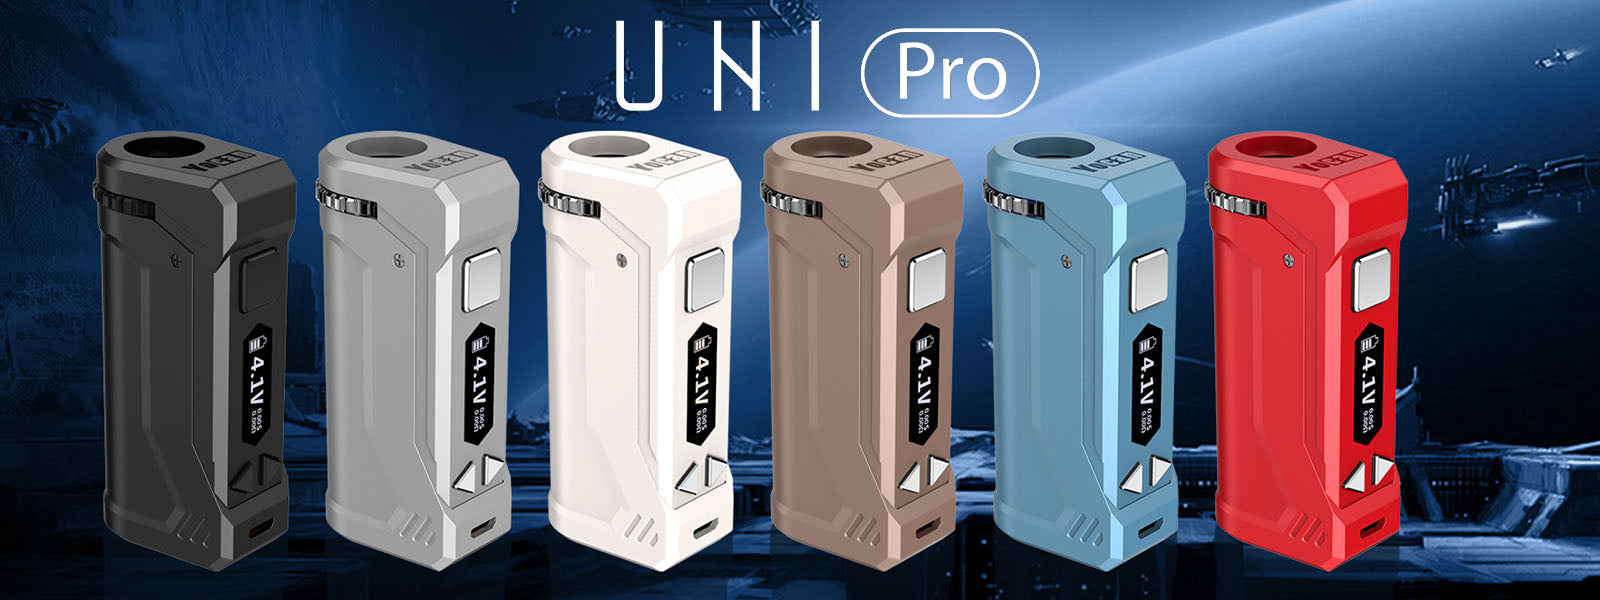 Uni Pro Available at Marketplace V